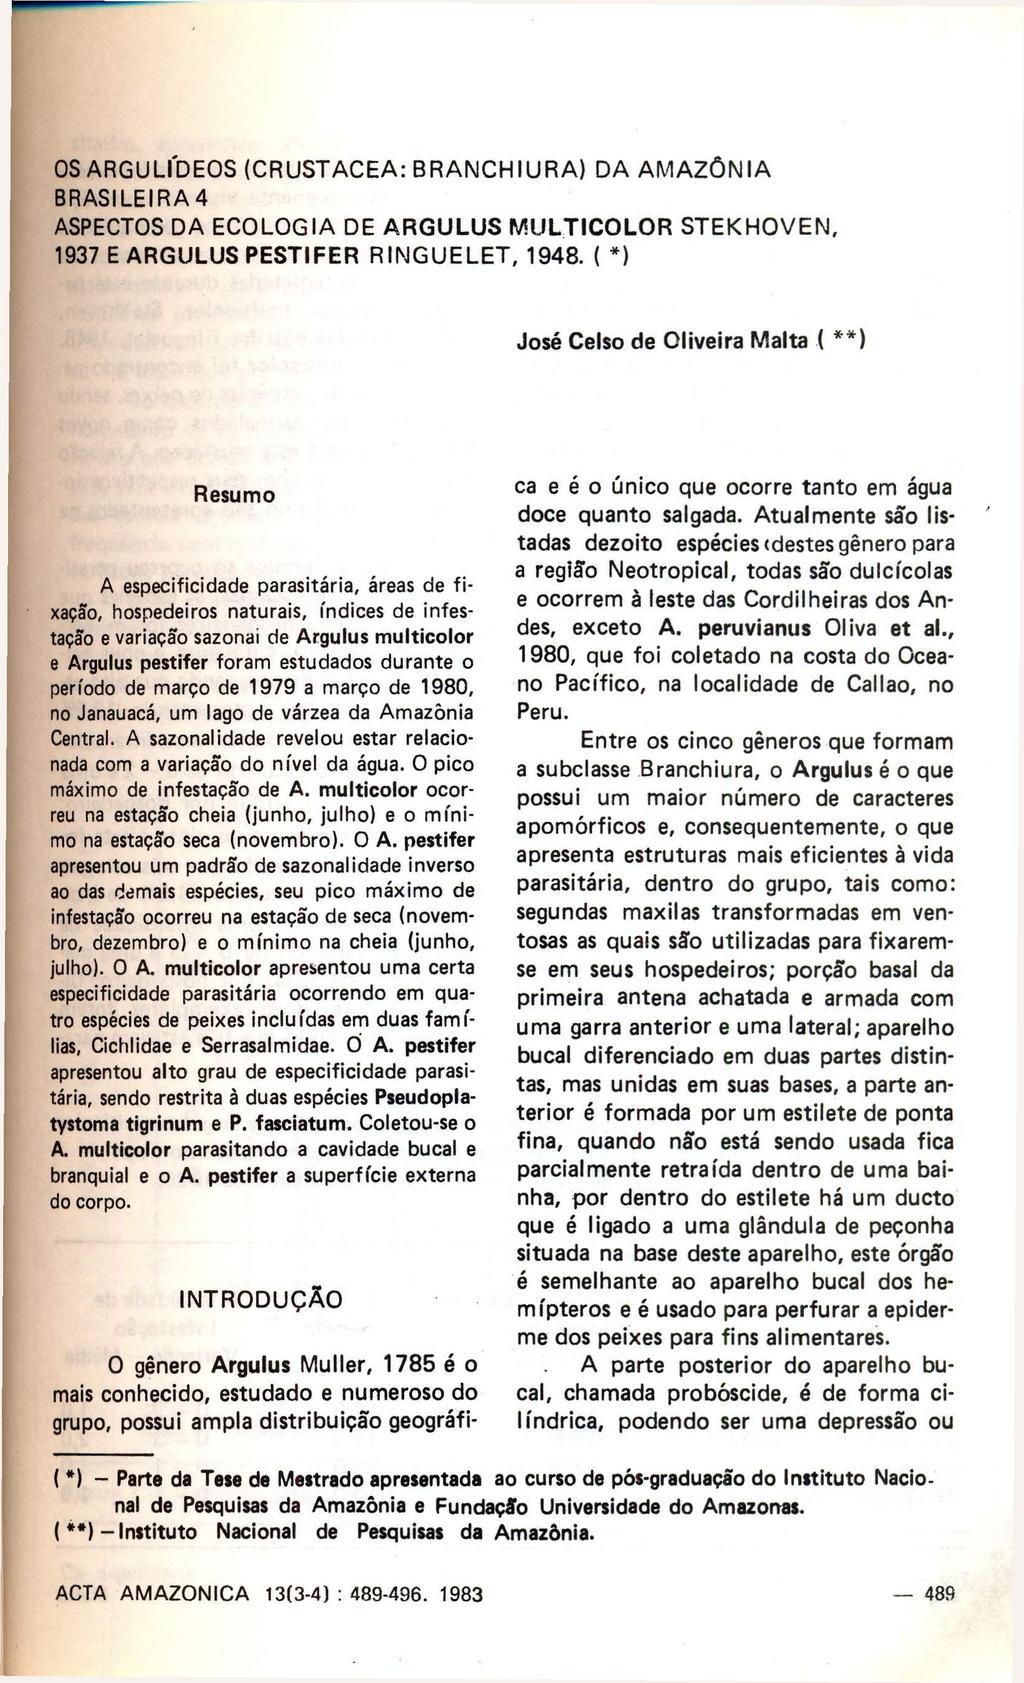 OSARGULIDEOS (CRUSTACEA: BRANCHIURA) DA AMAZÔNIA BRASILEIRA 4 ASPECTOS DA ECOLOGIA DE ARGULUS MULTICOLOR STEKHOVEN, 1937 E ARGULUS PESTIFER RINGUELET, 1948.